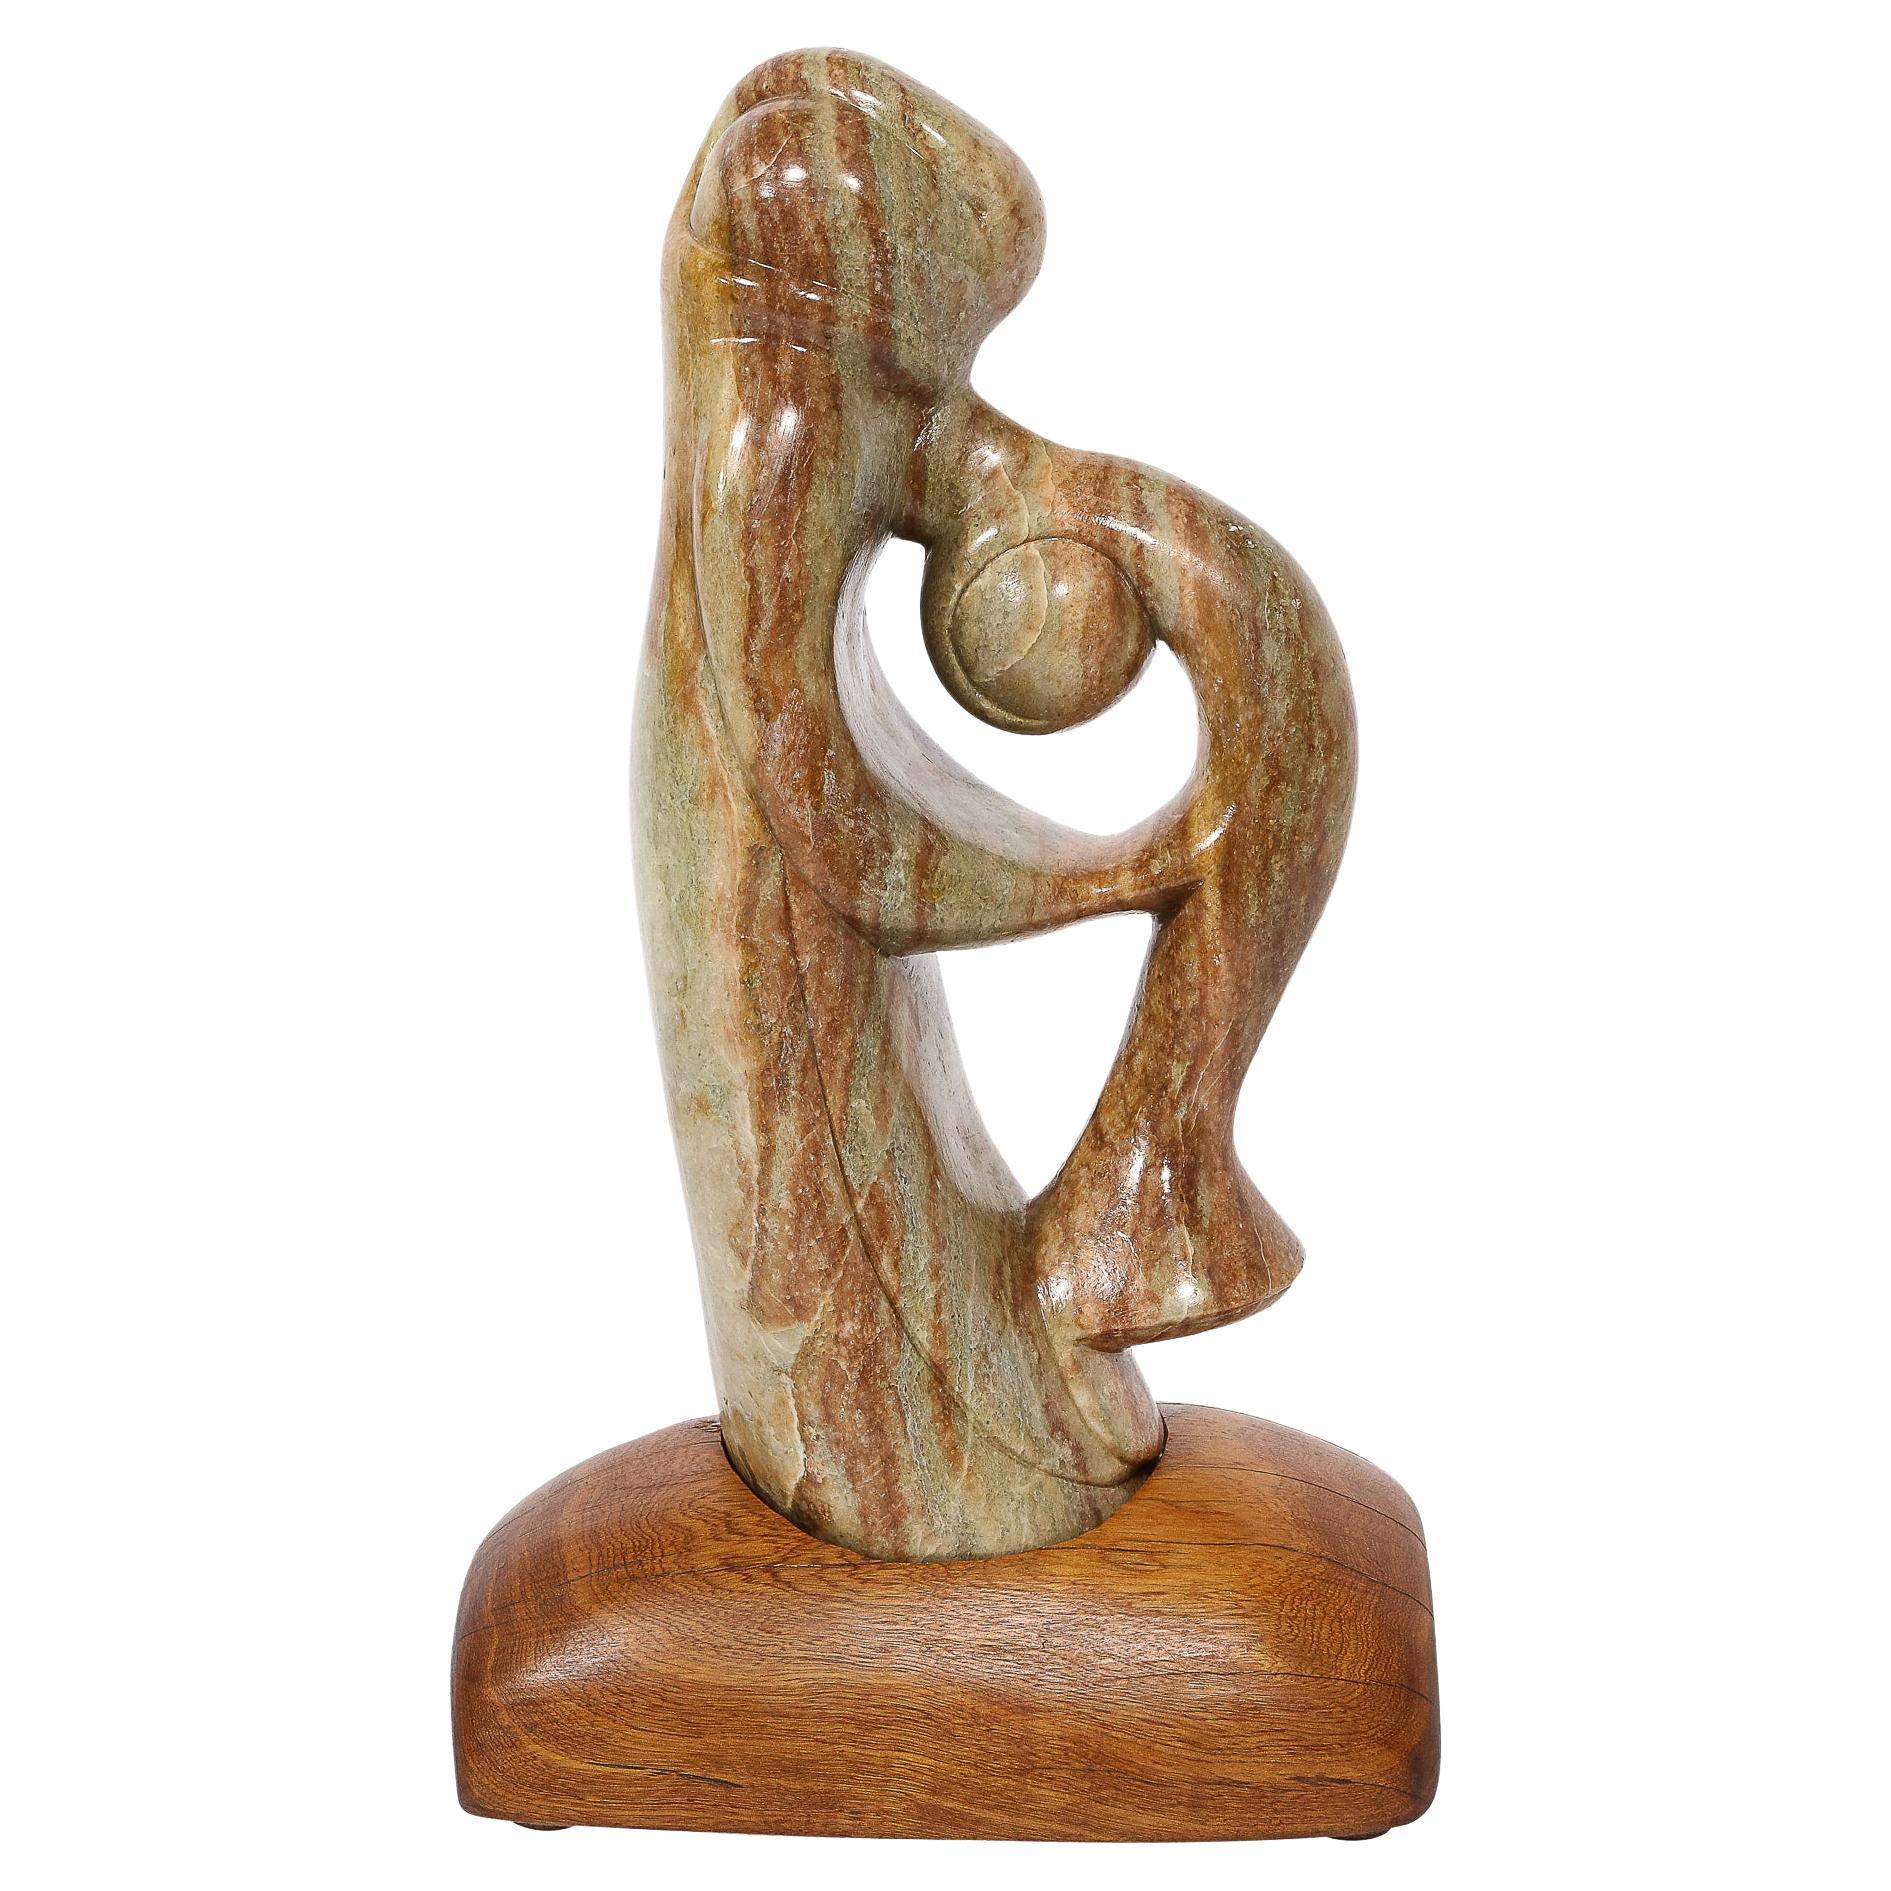 Modernist Dan Bedik Sculpture "Musical Embrace" in Green Marble with Walnut Base For Sale